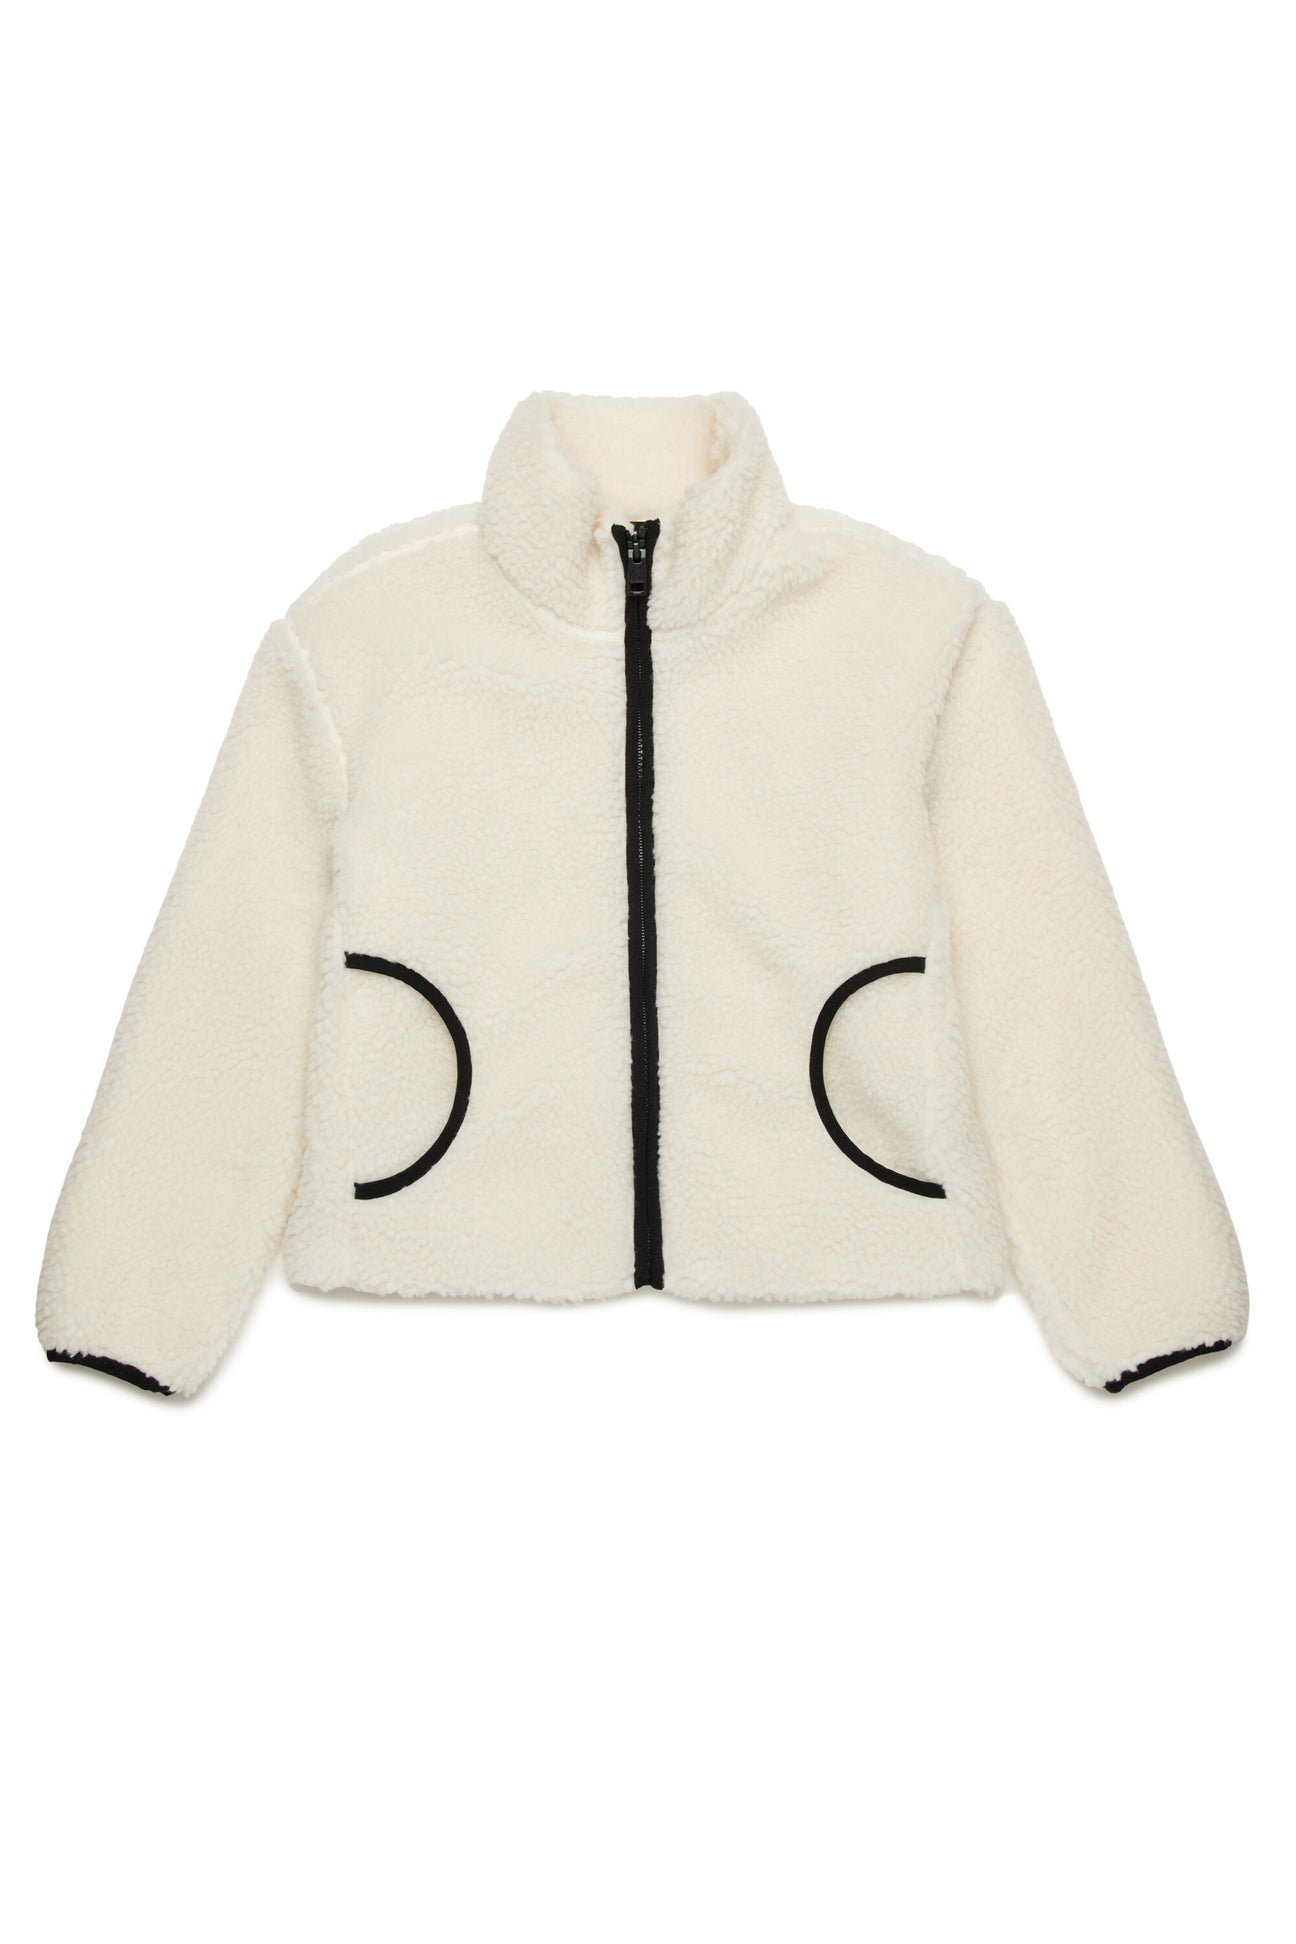 Oval D branded teddy jacket 